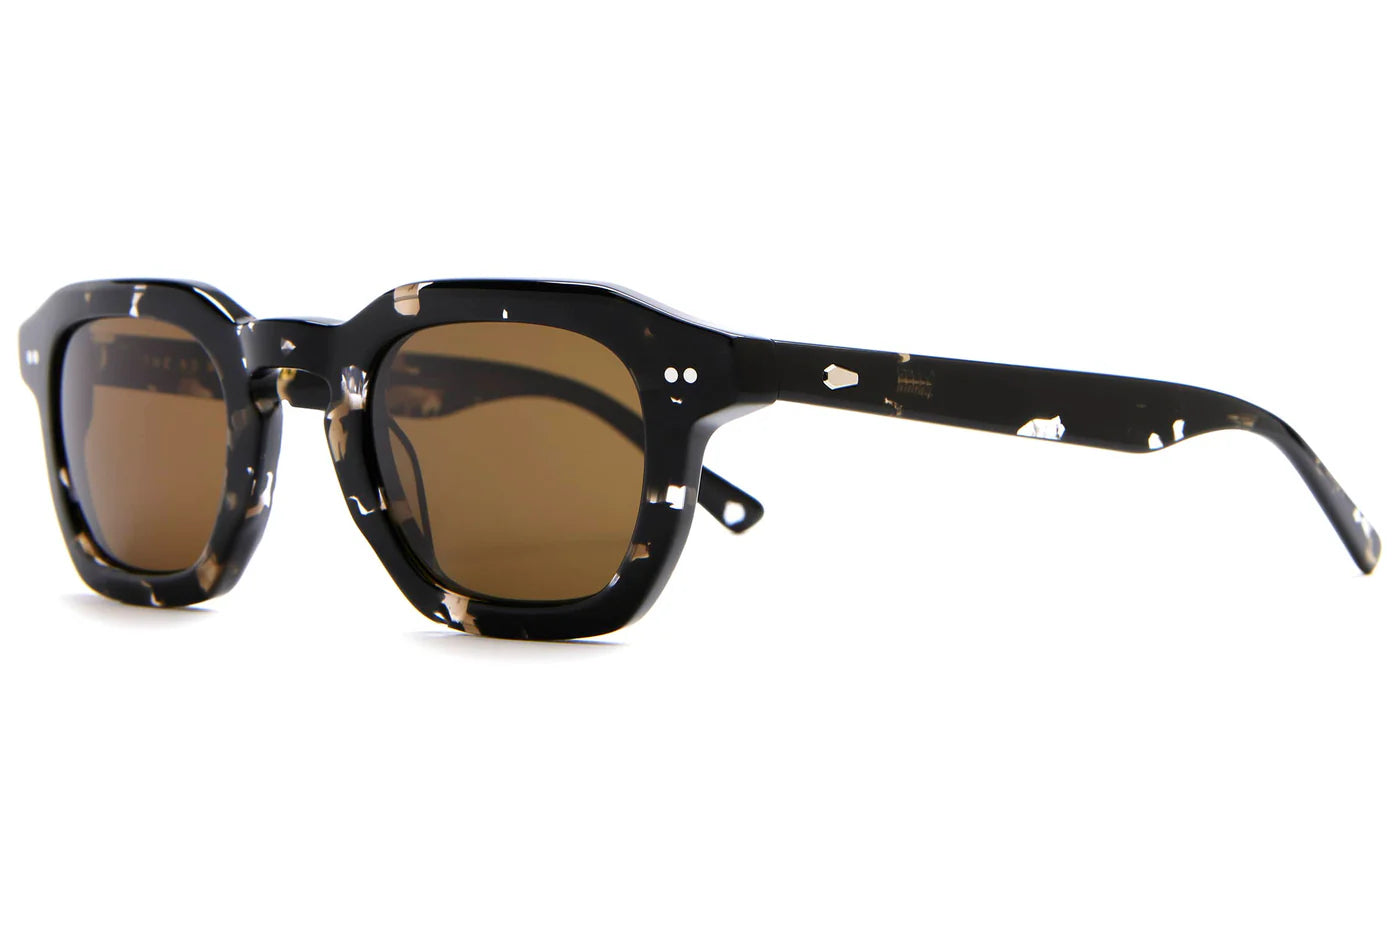 The No Wave | Black Tortoise Bio Polarized Sunglasses